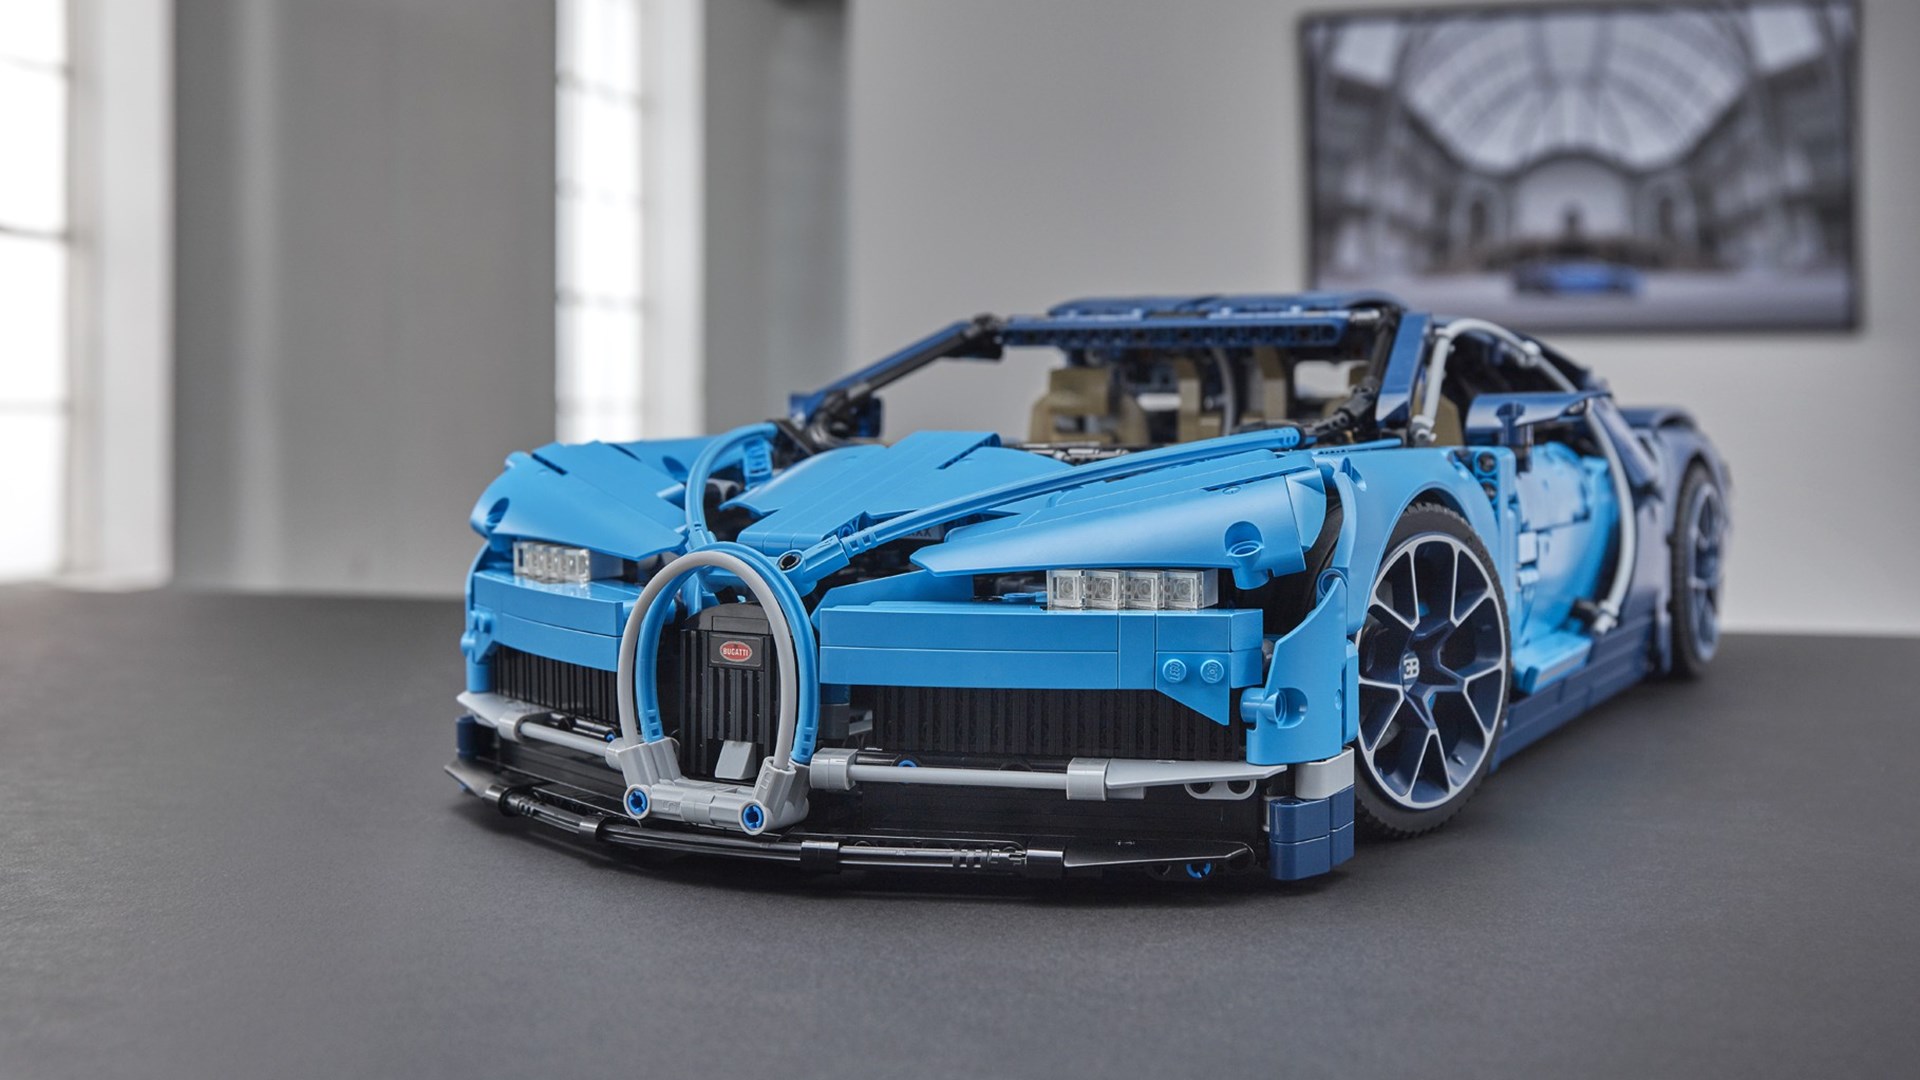 LEGO 599 Piece Technic Bugatti Chiron Kit Goes On Sale Today